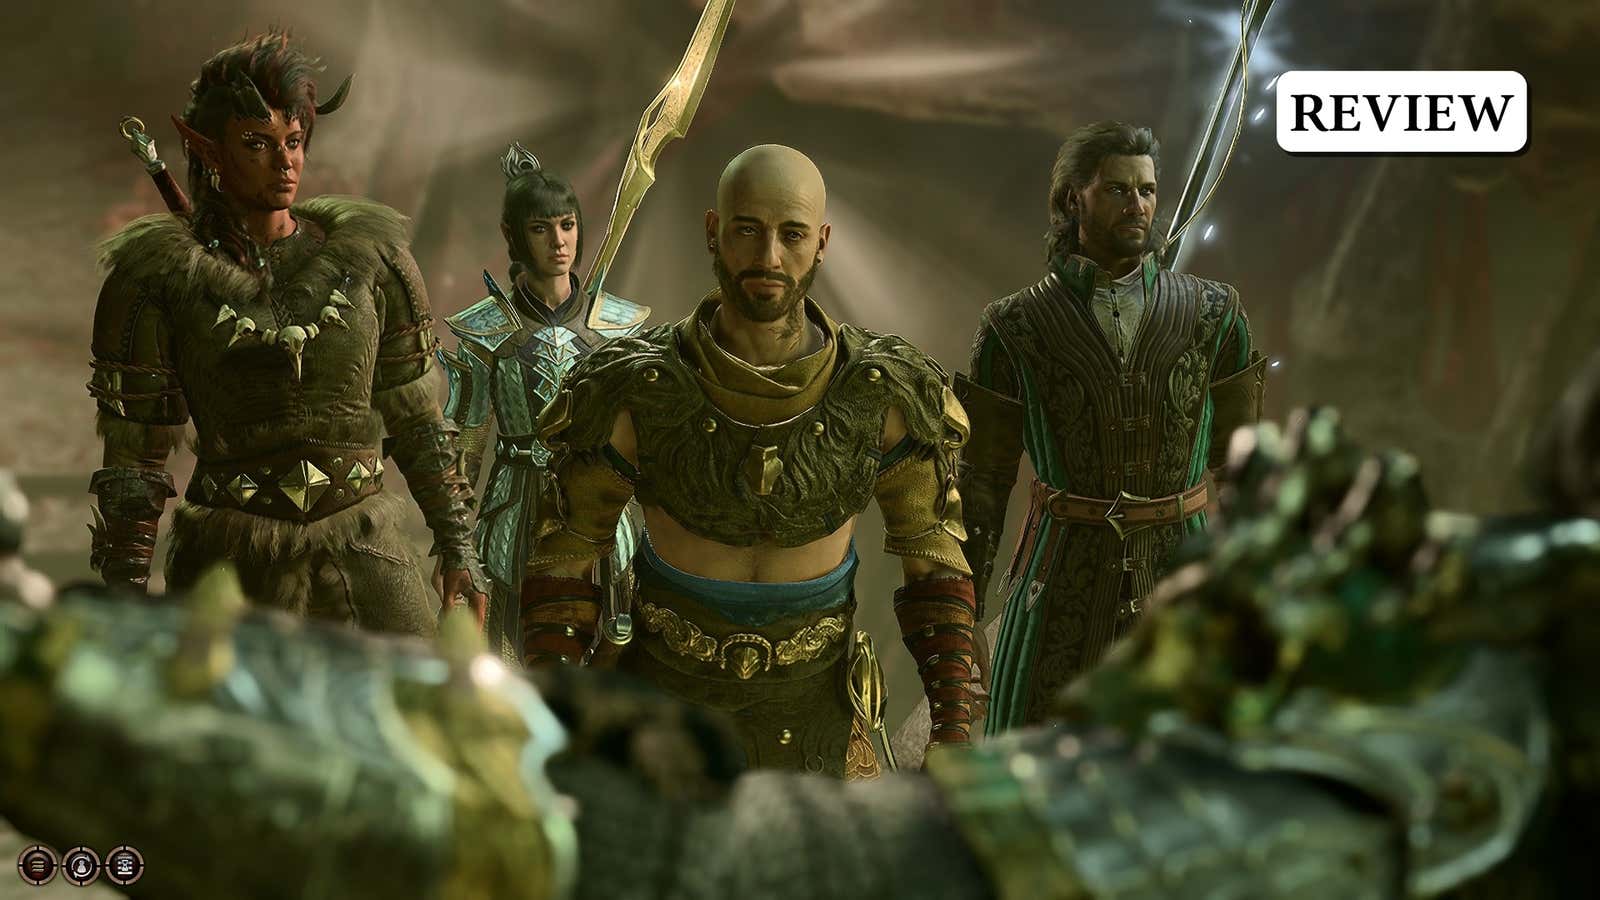 Baldur's Gate 3 Outshines Tears of the Kingdom on Metacritic